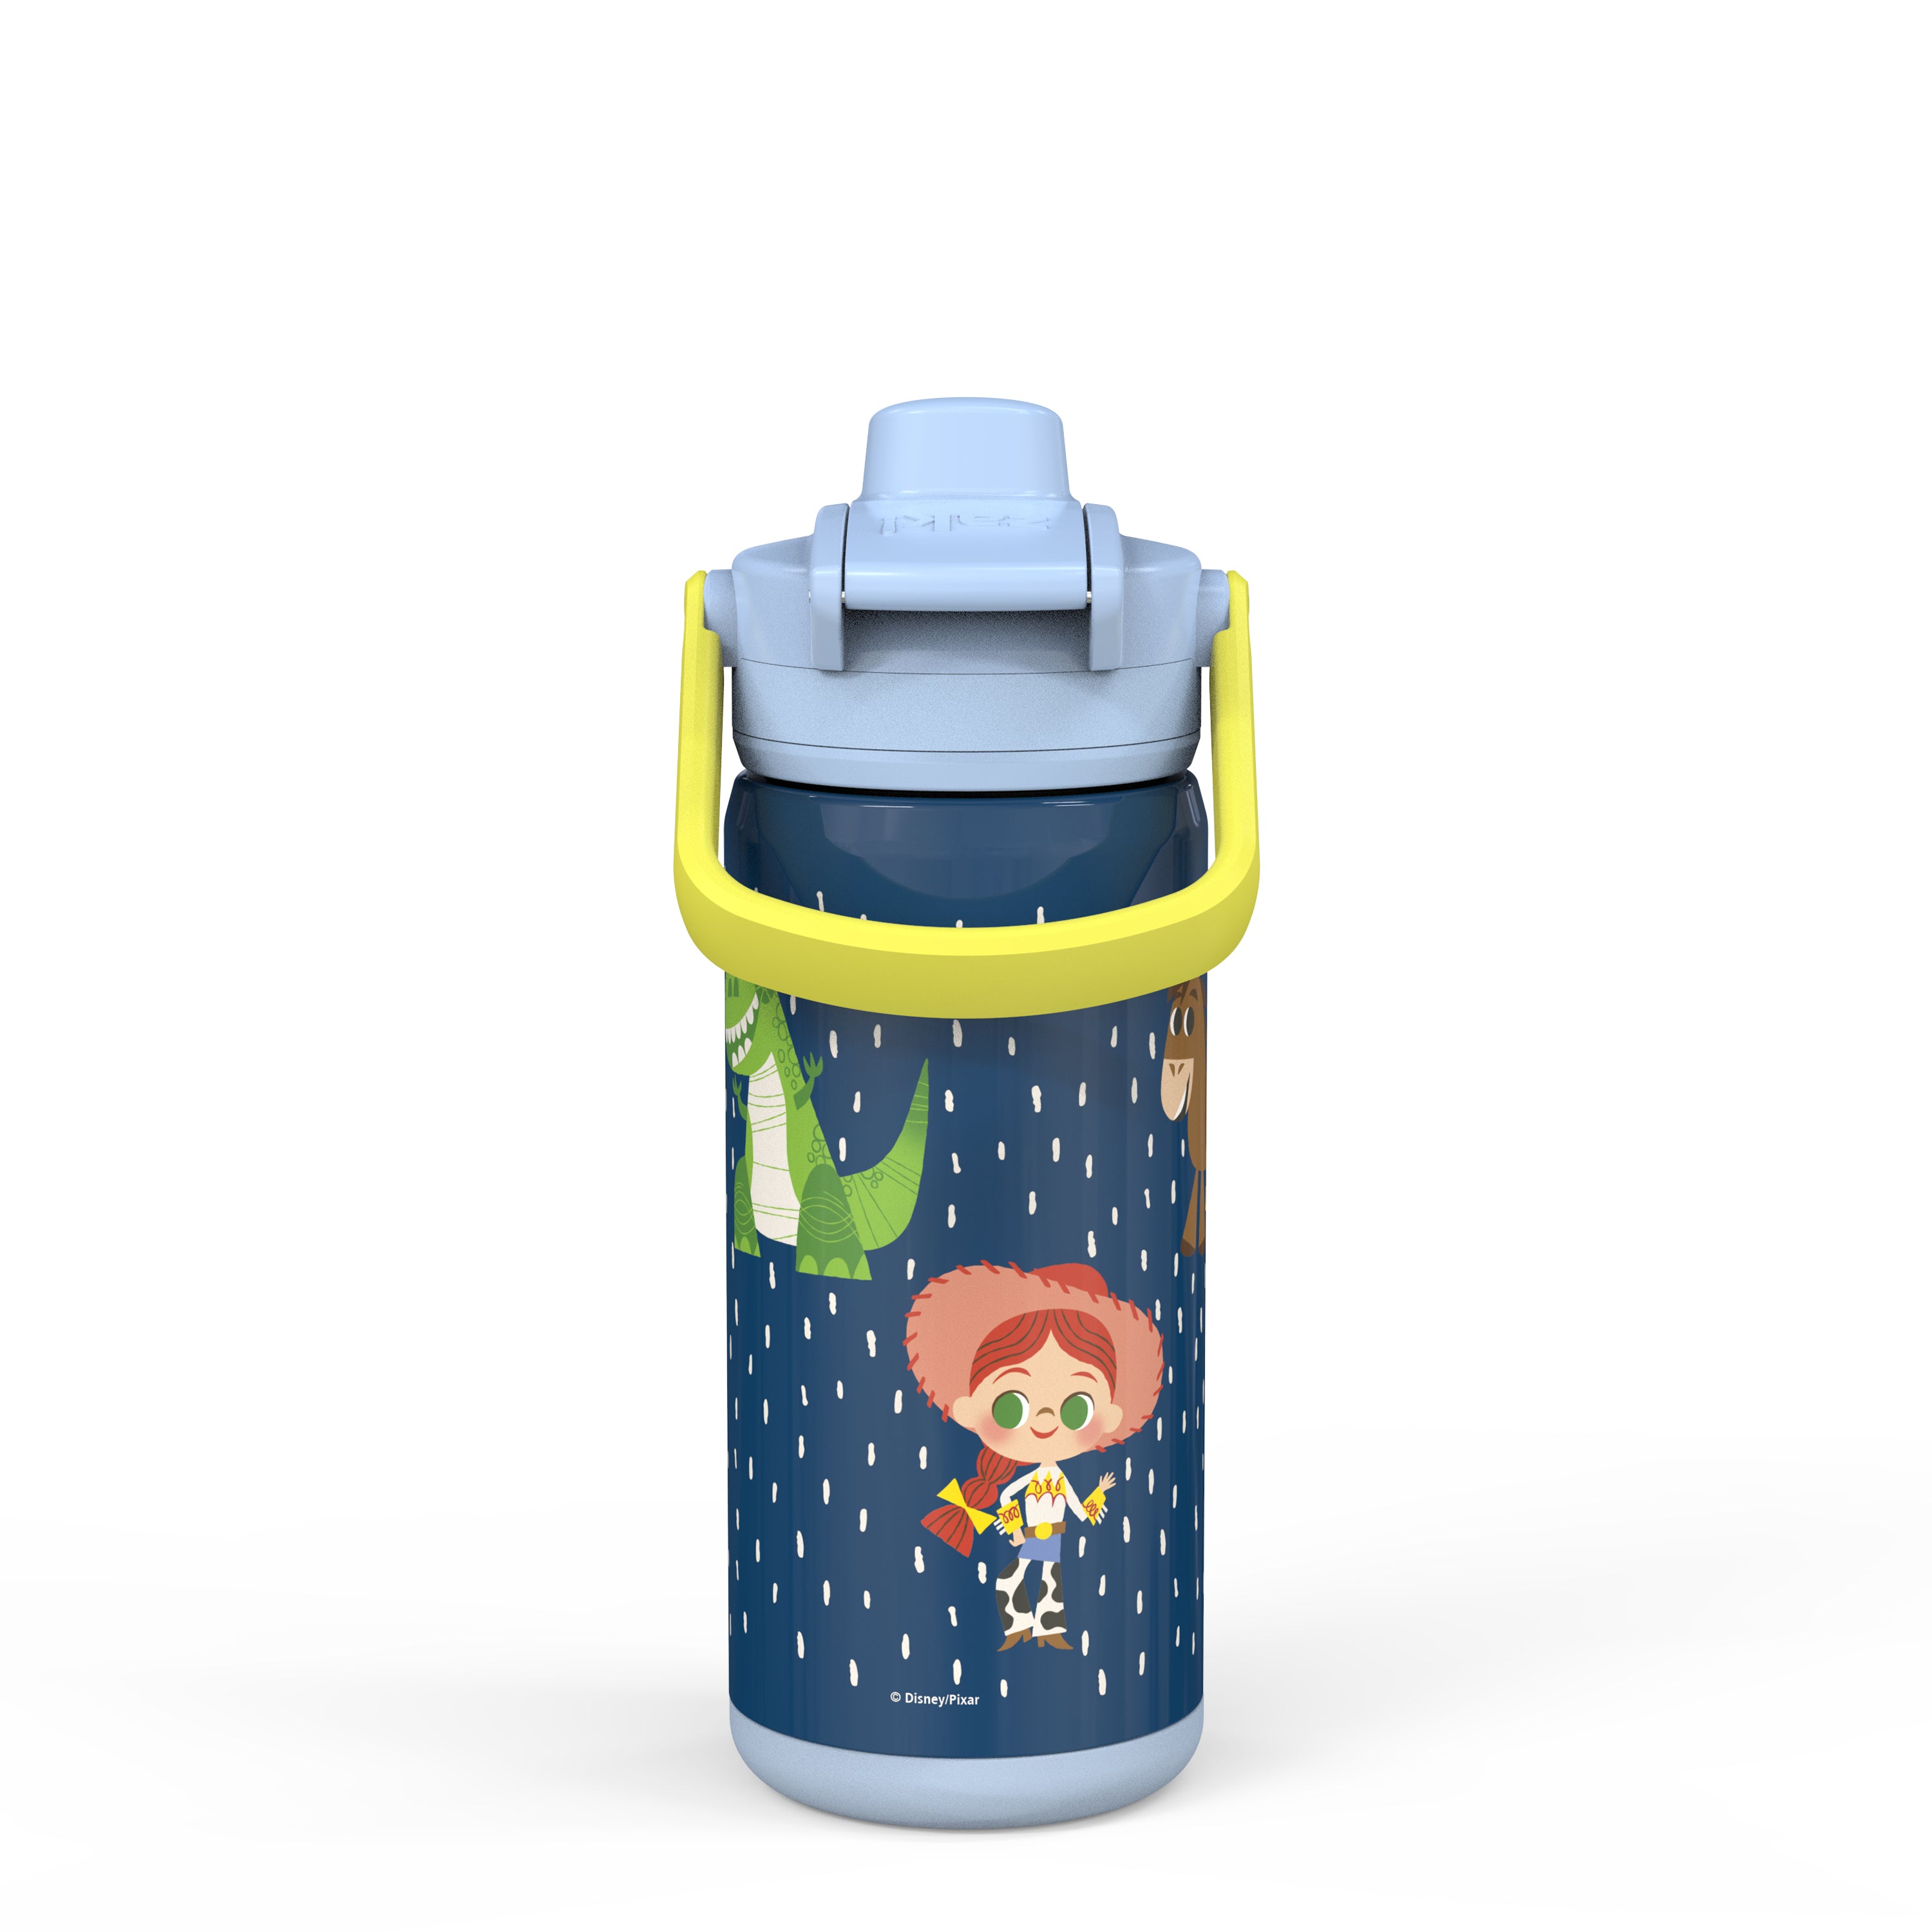 Contigo recalling replacement lids on kids' water bottles